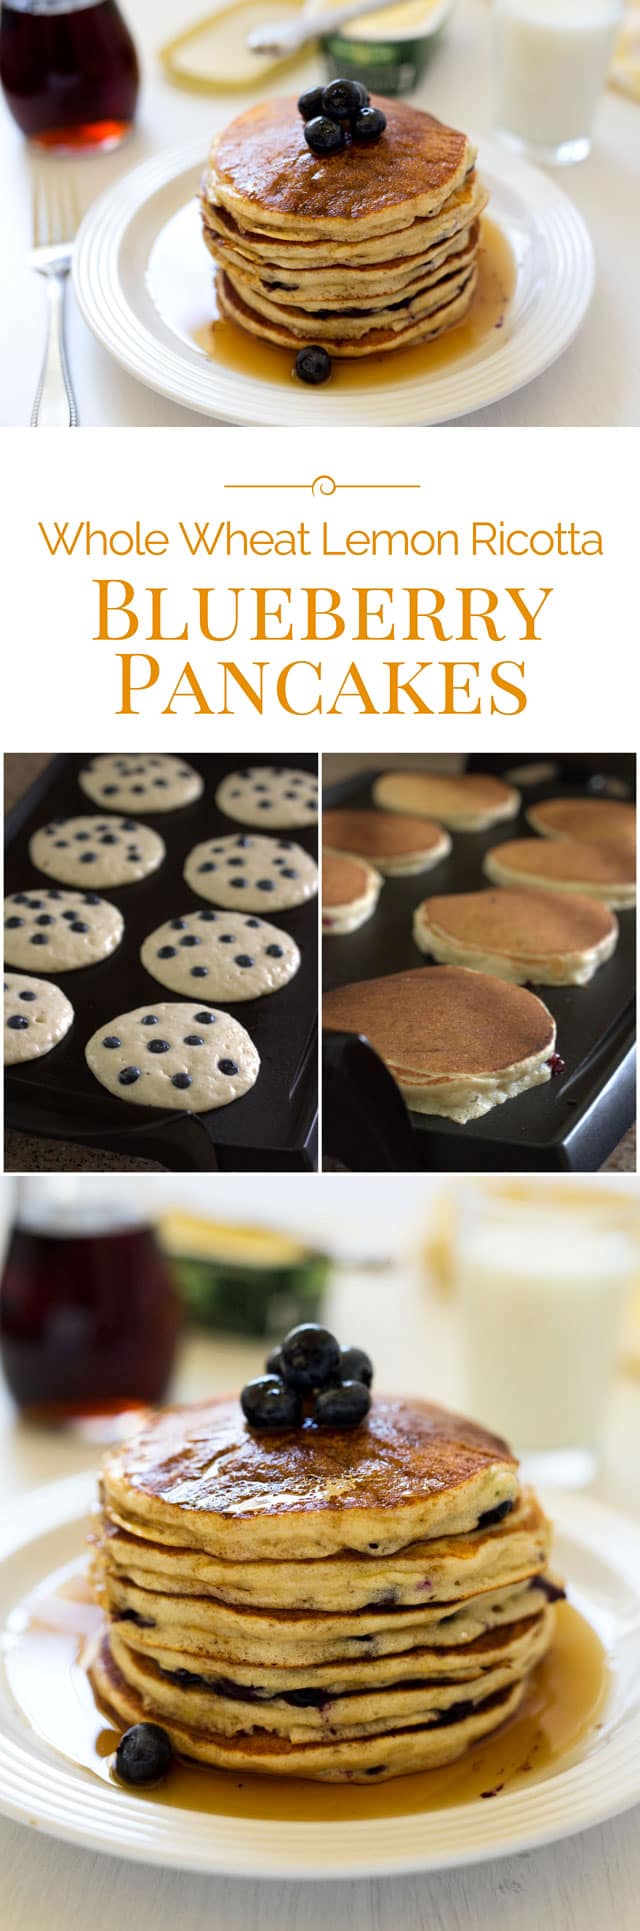 Whole-Wheat-Lemon-Ricotta-Blueberry-Pancakes-Collage-2-Barbara-Bake